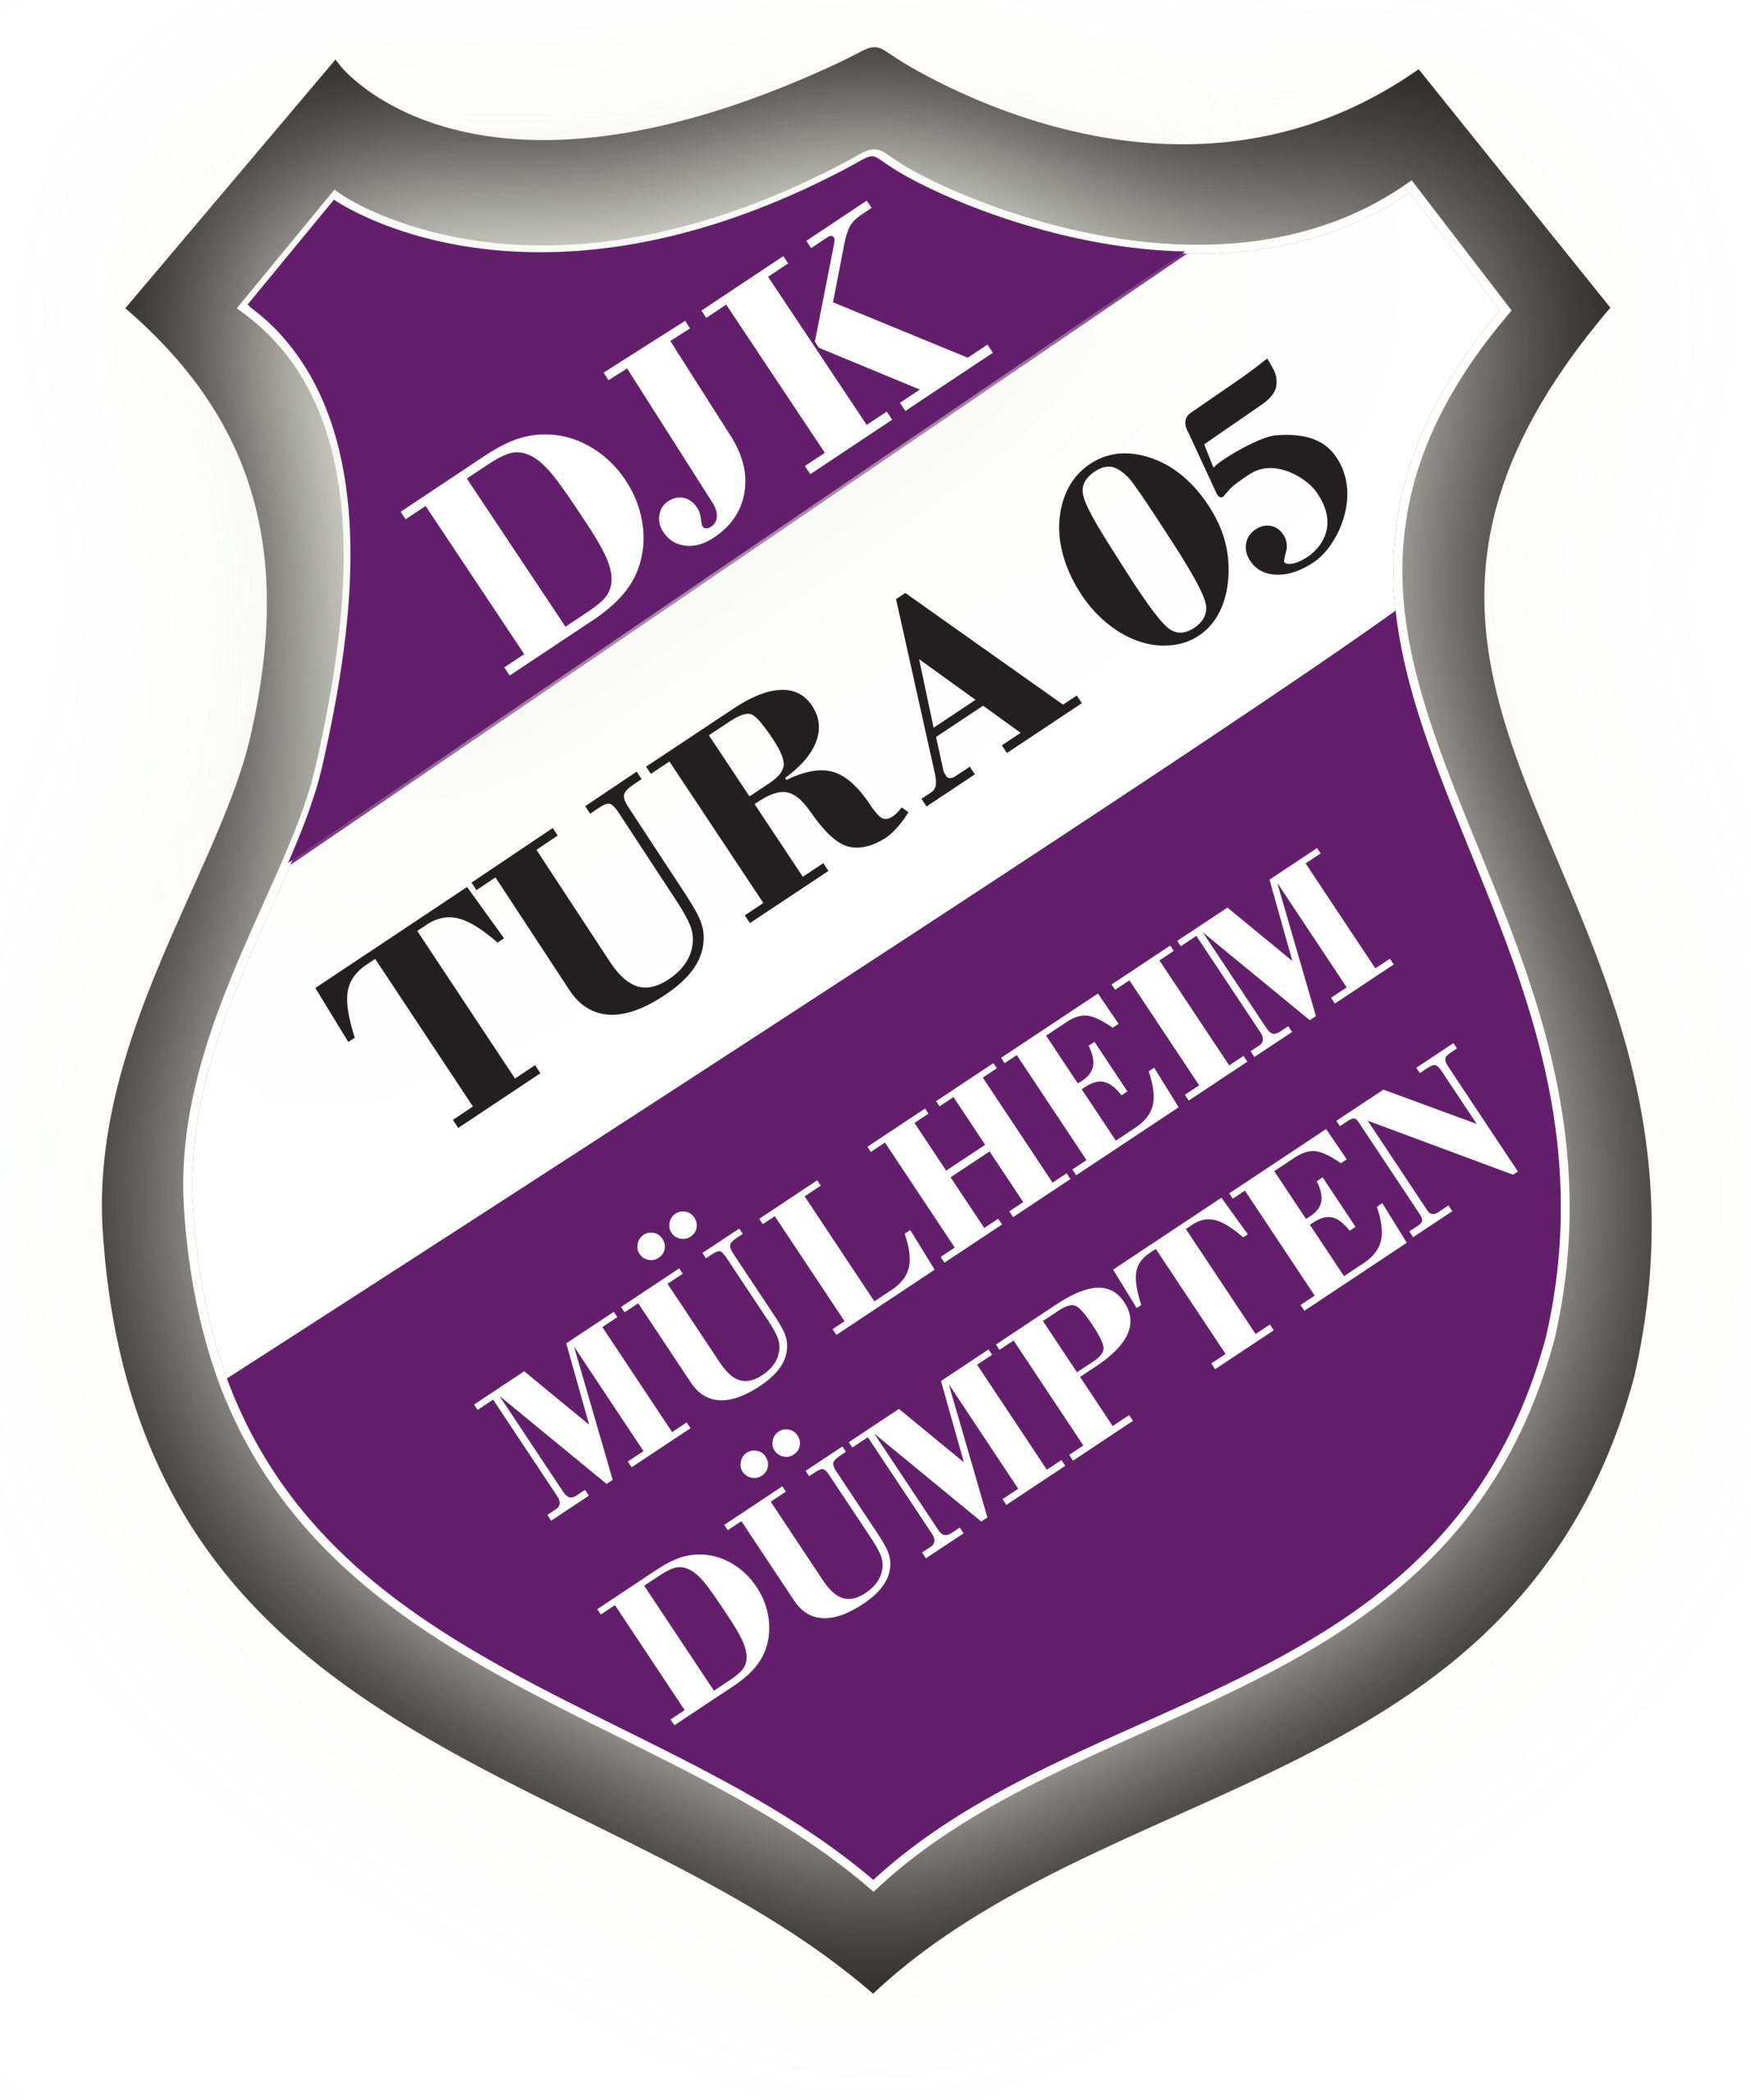 DJK Tura05 e.V.